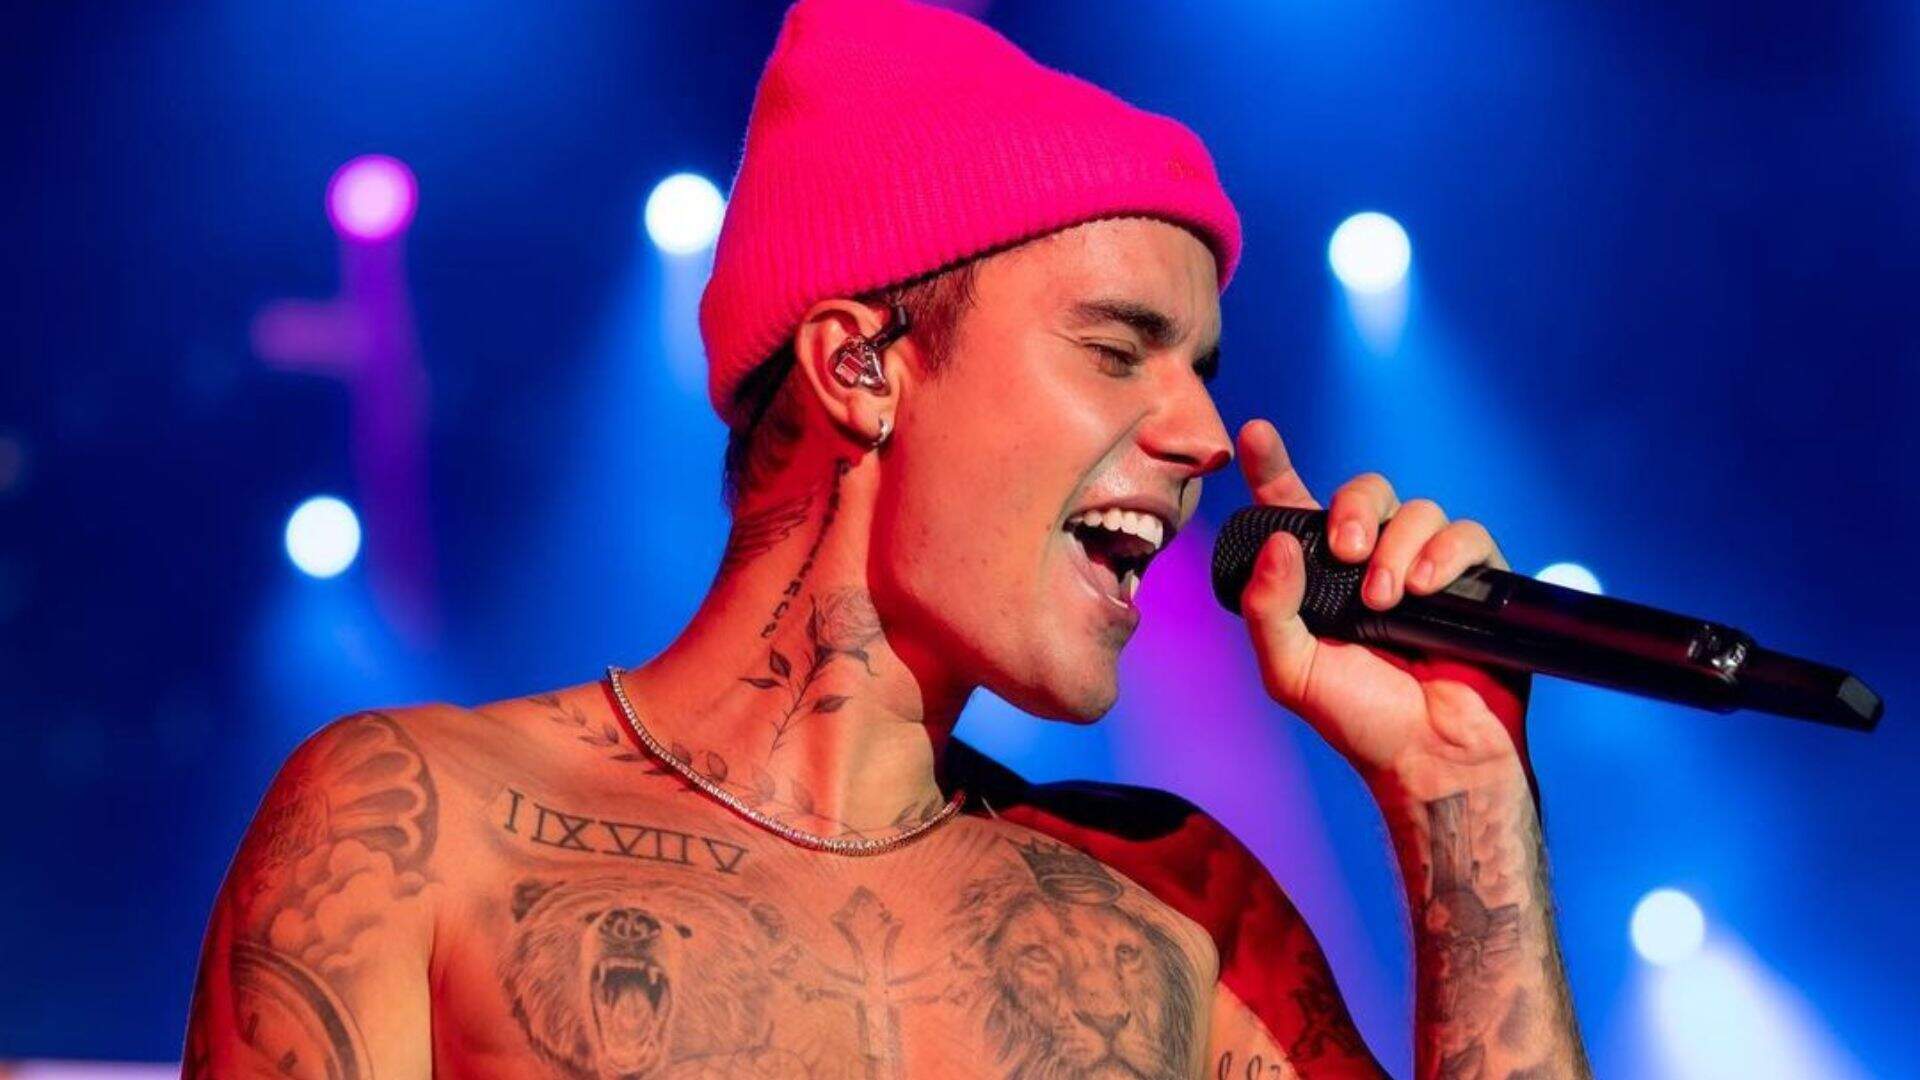 “Te amo, Rio” Justin Bieber posta sequência de fotos após show no Rock In Rio - Metropolitana FM